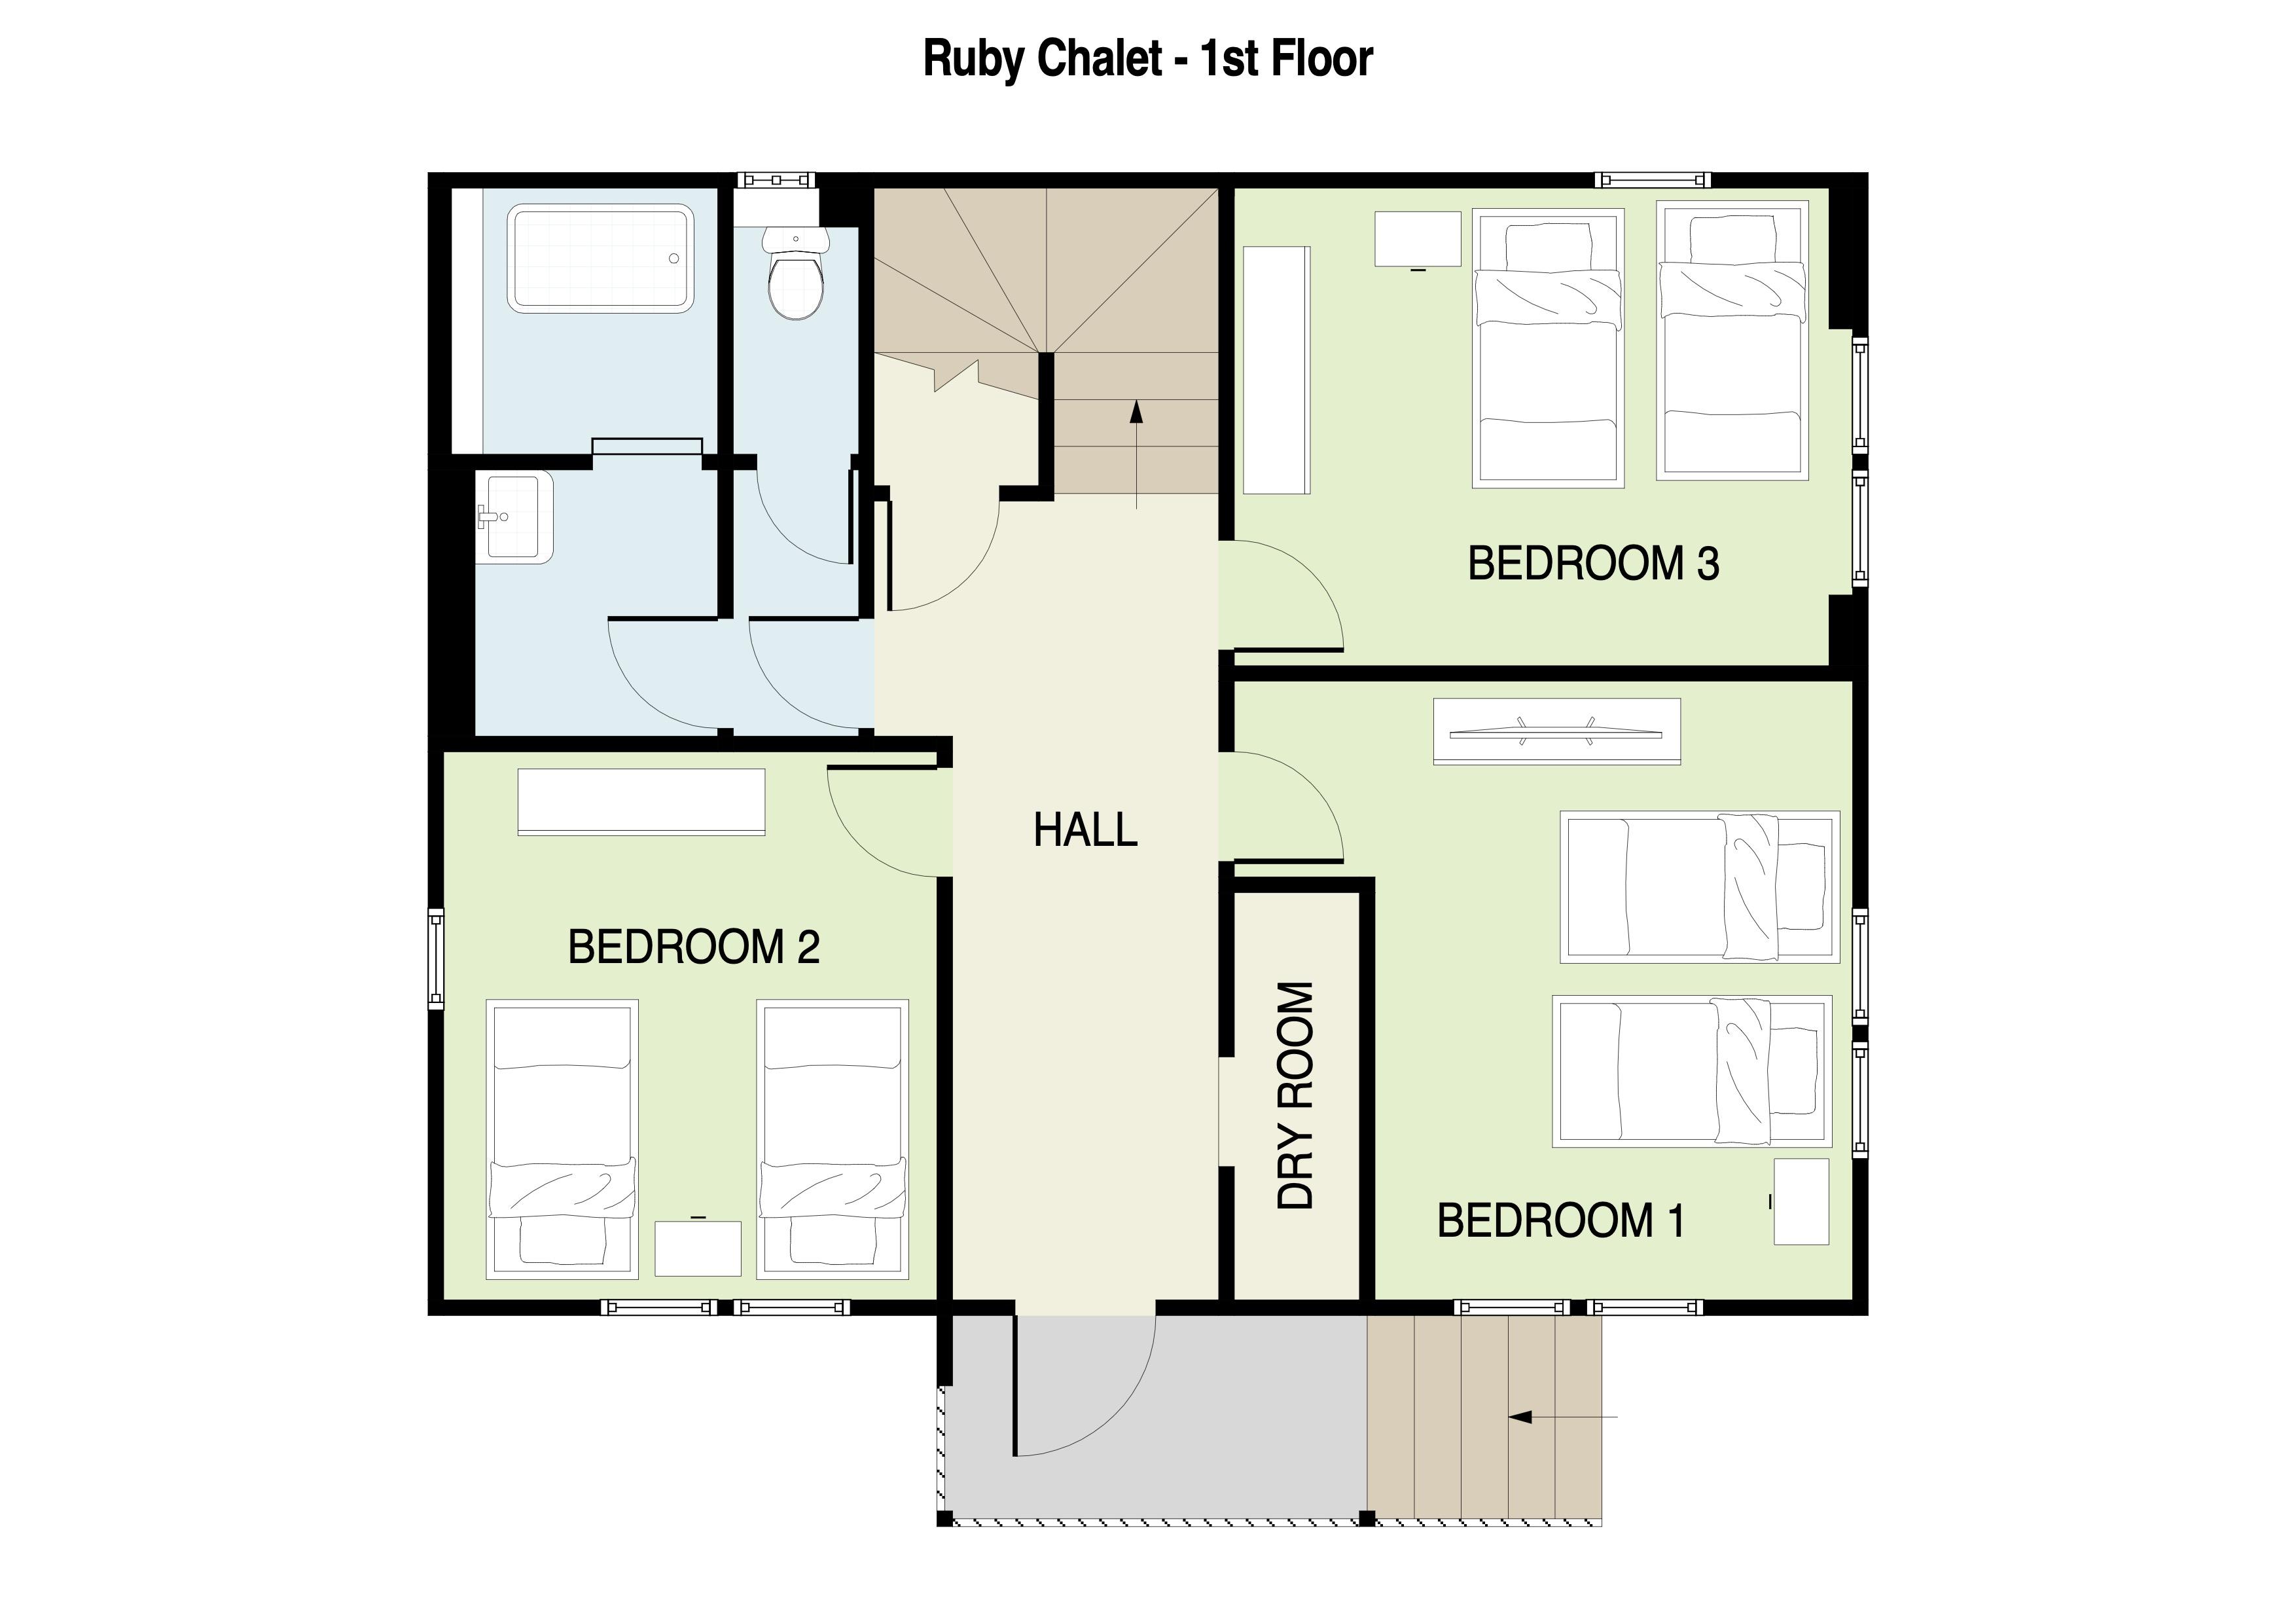 Ruby Chalet 1st floor plans